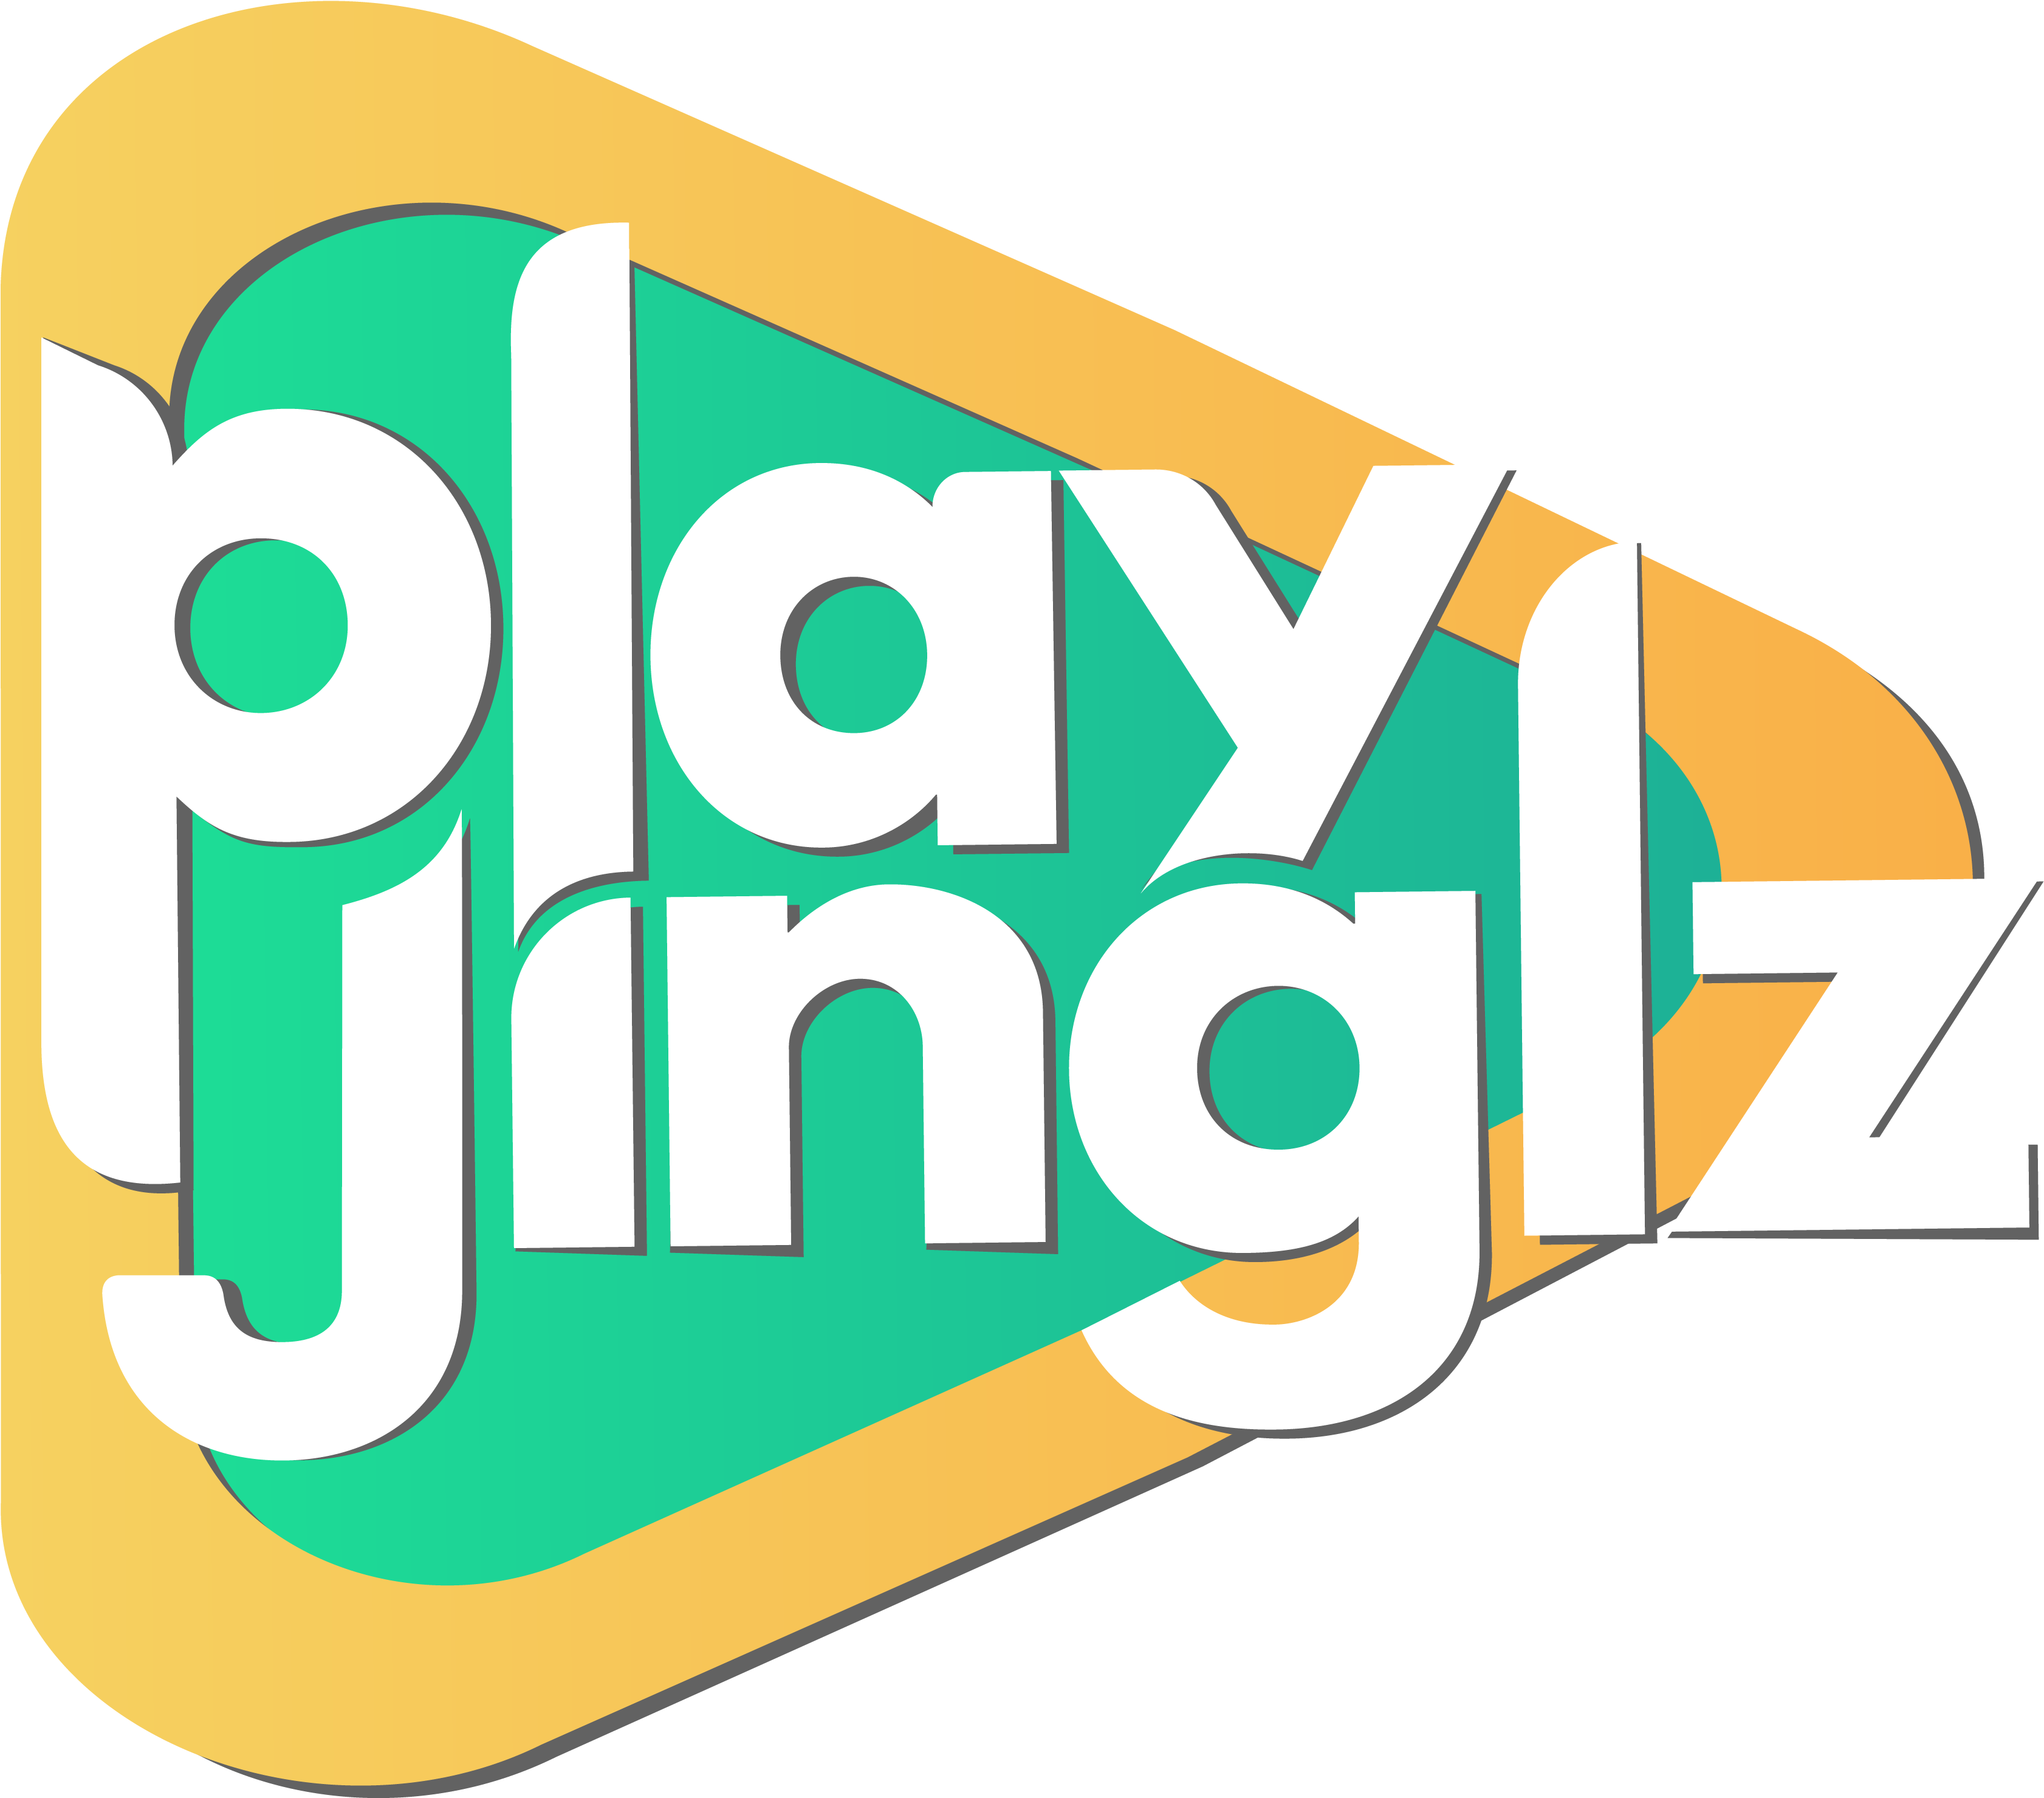 Image - Playjinglz - Play, Engage, & Win (or Give) (3888x3336)